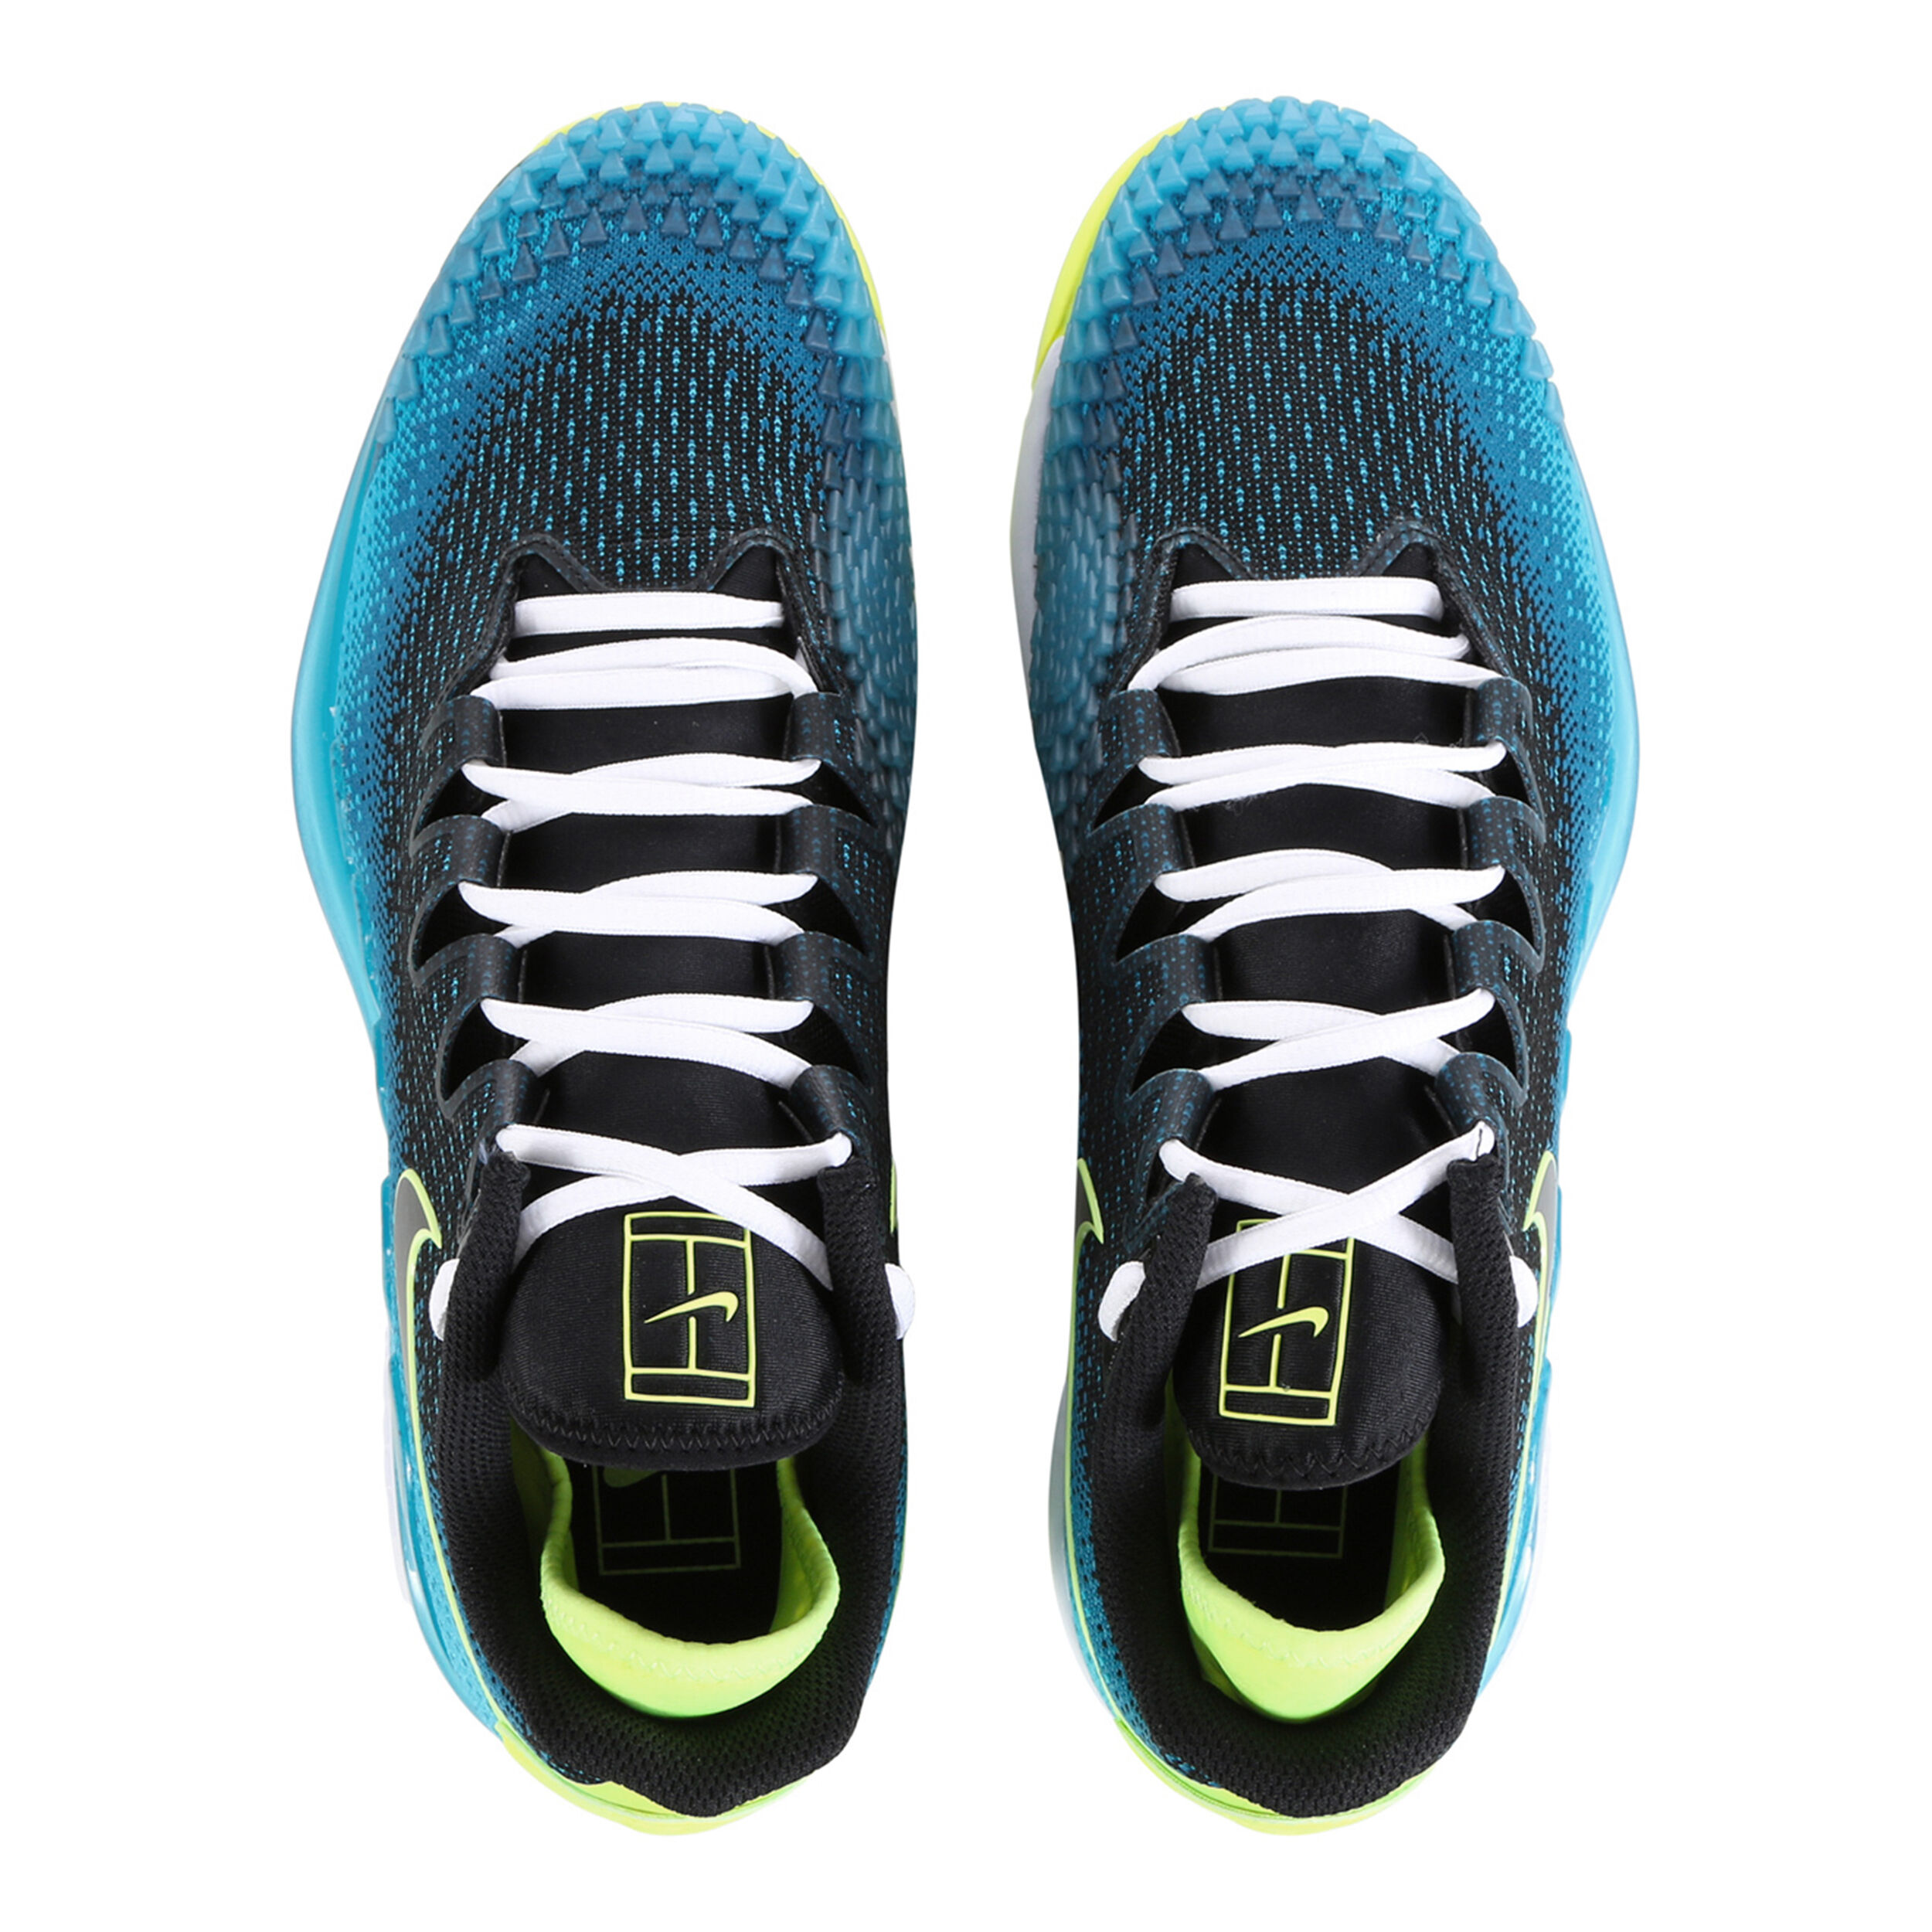 Buy Nike Air Zoom Vapor X Knit All Court Shoe Men Turquoise, Black 